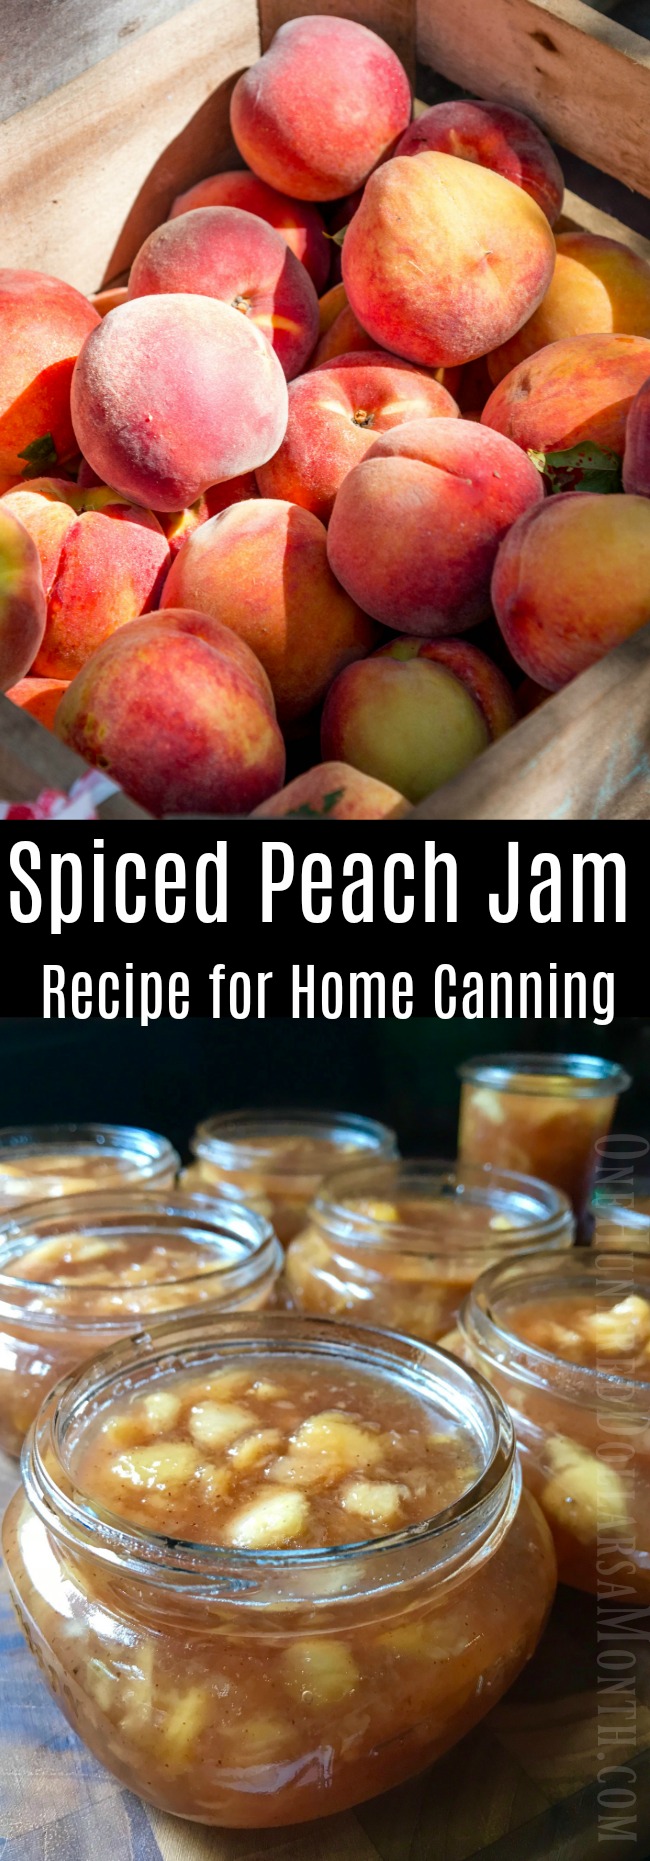 Home Canning – Spiced Peach Jam Recipe